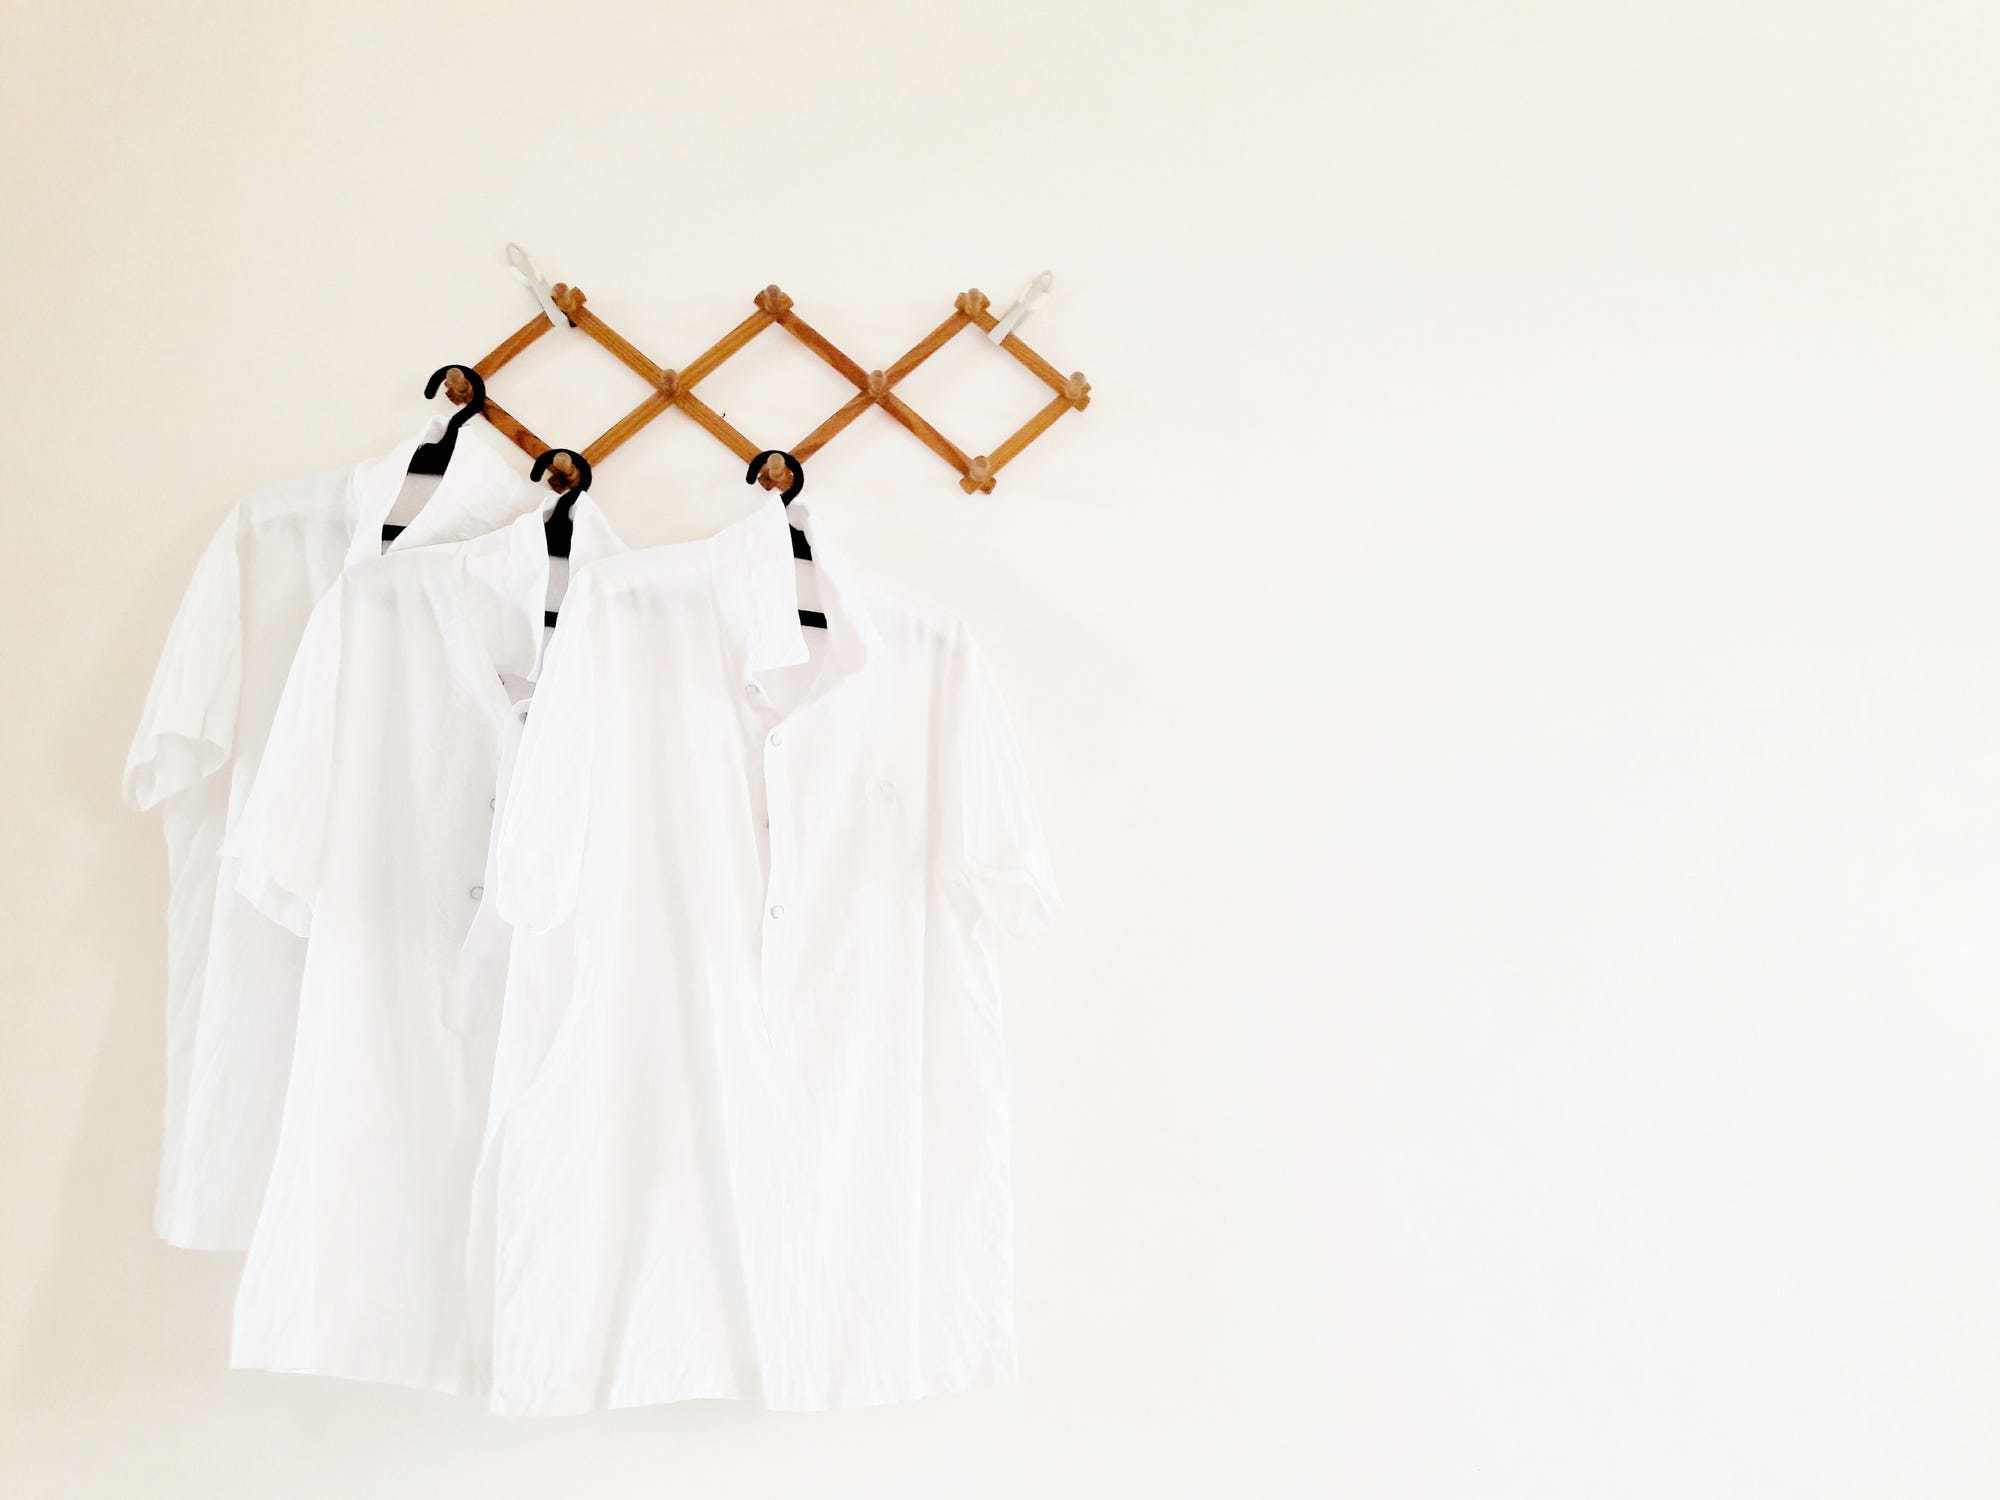 White shirts hanging on a hanging rack.